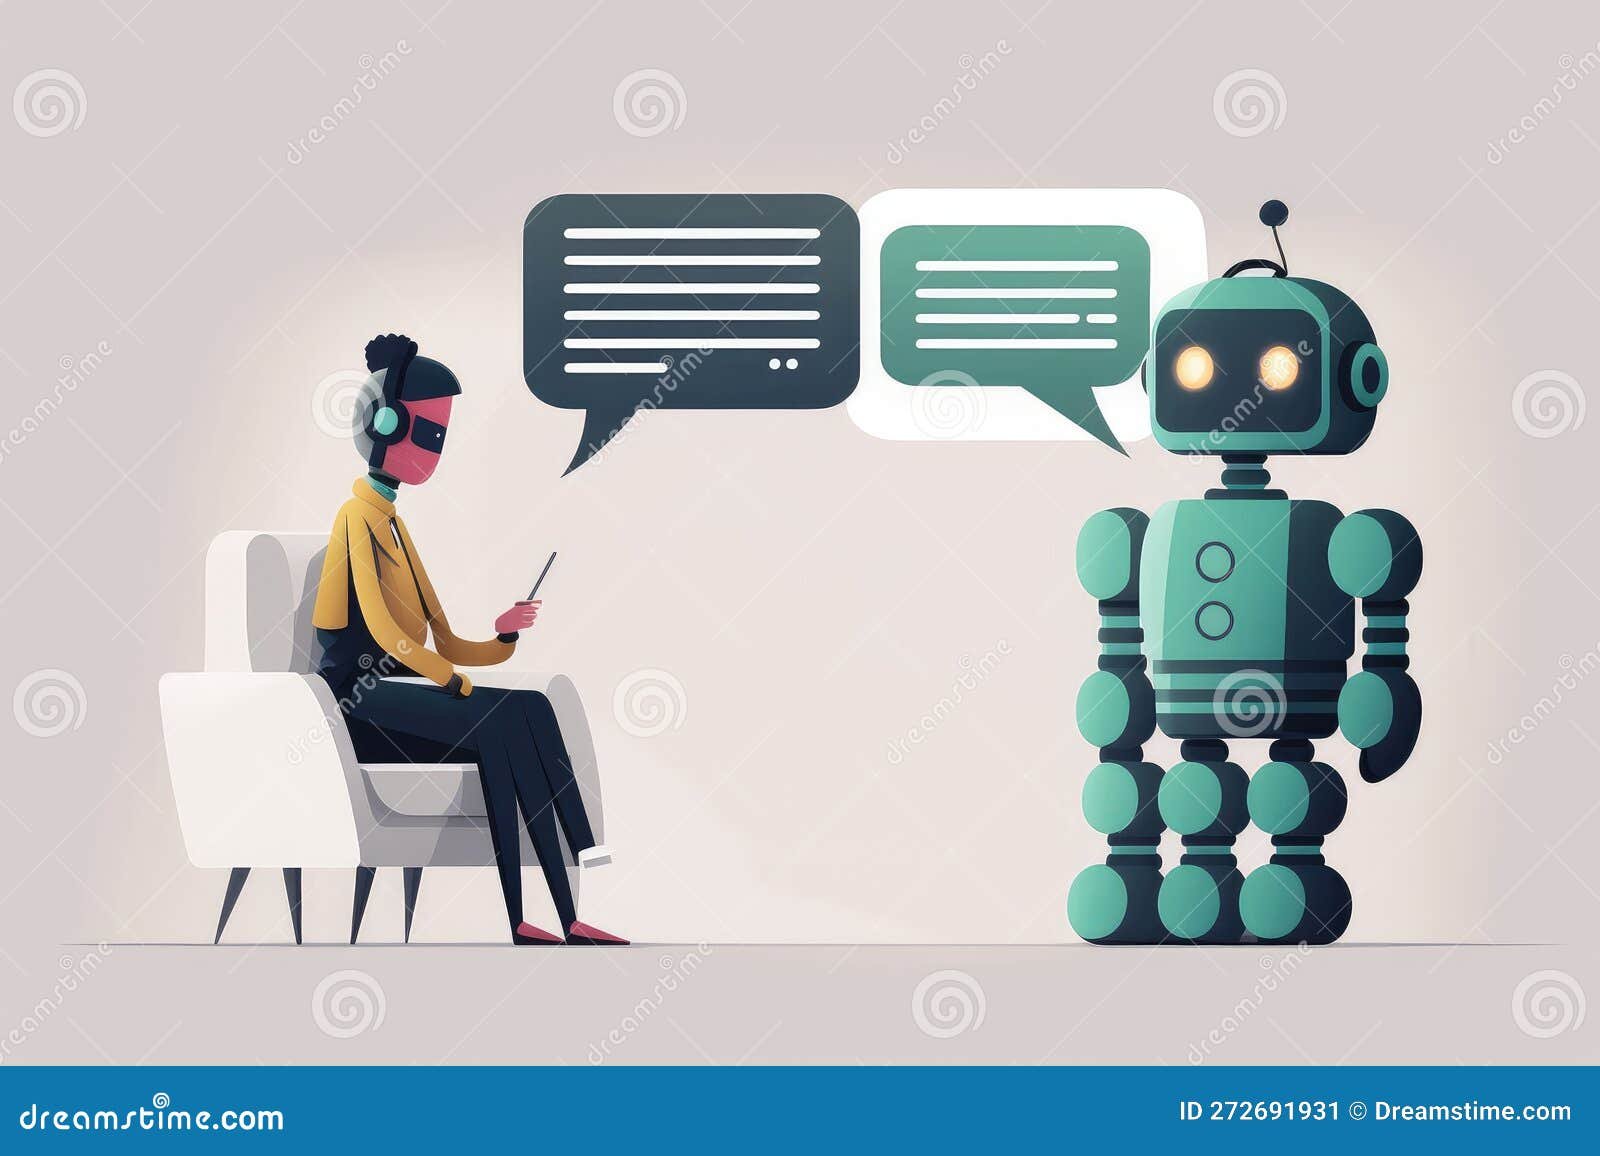 ilustracion de un robot conversando con usuarios